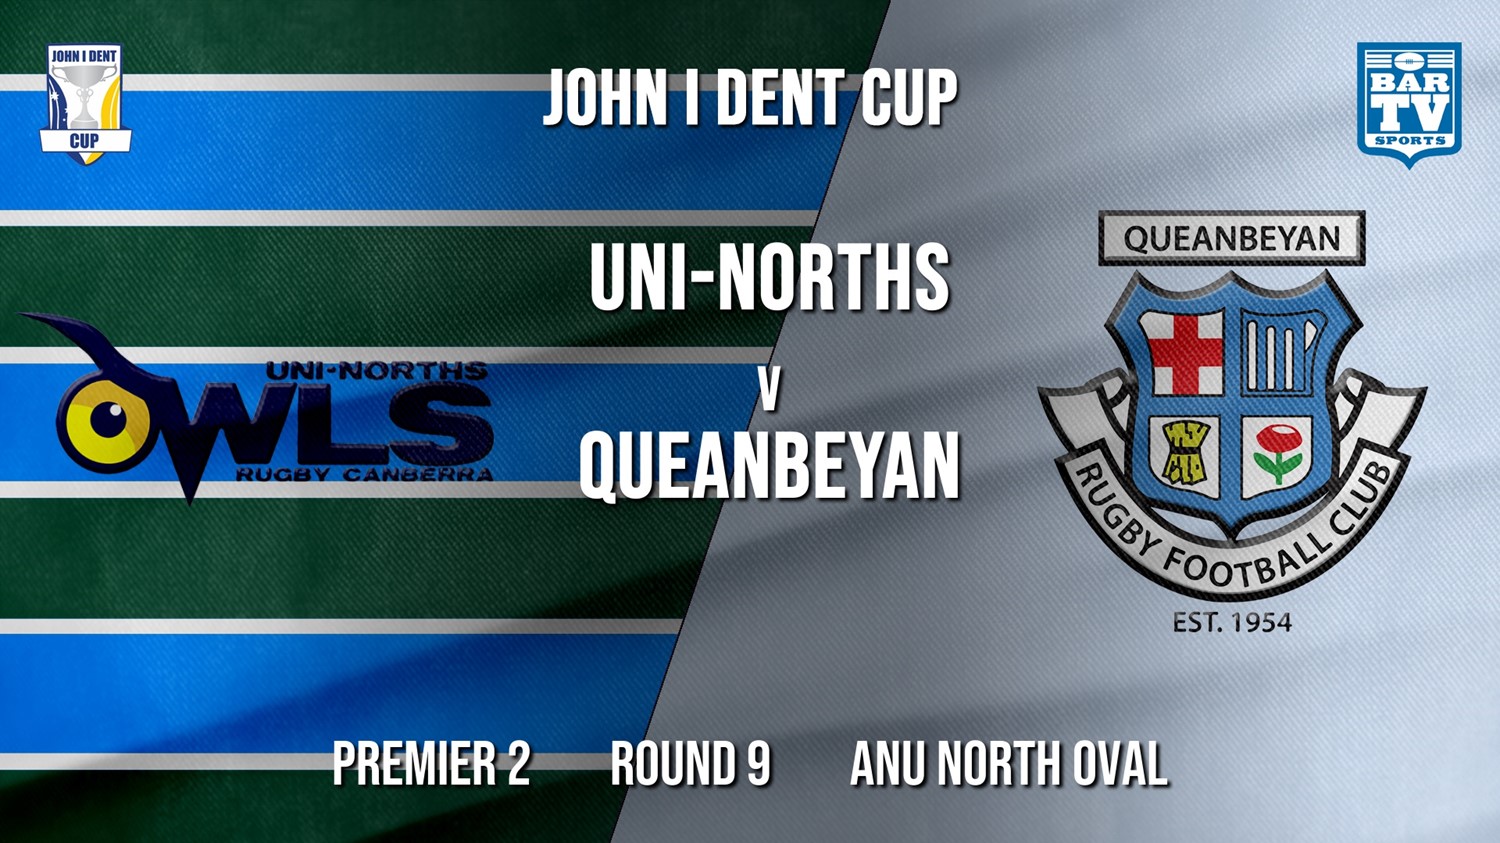 John I Dent Round 9 - Premier 2 - UNI-Norths v Queanbeyan Whites Minigame Slate Image